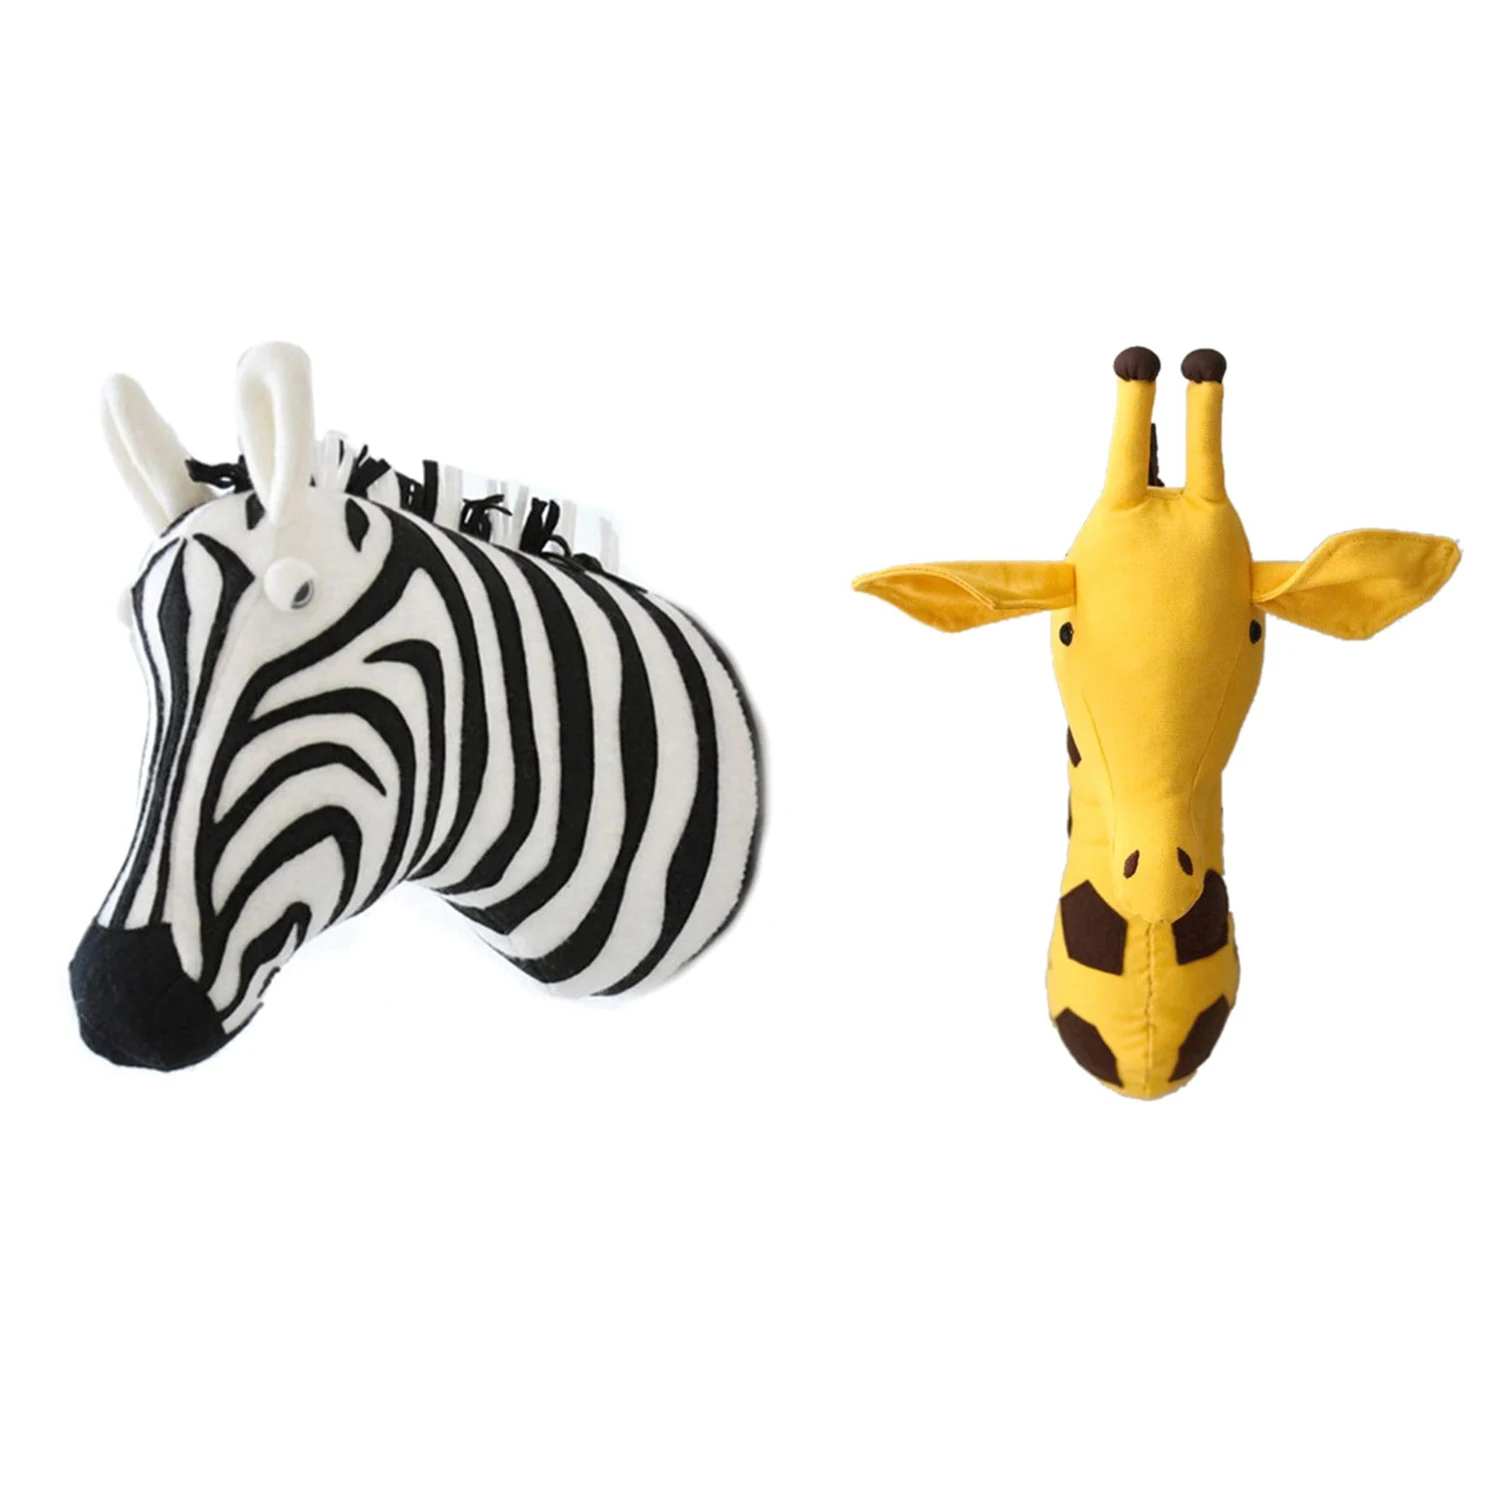 

2 Pcs 3D Animal Head Wall Cute Stuffed Wall Hanging Toys Kids Room Animal Wall Sculptures Giraffe & Zebra